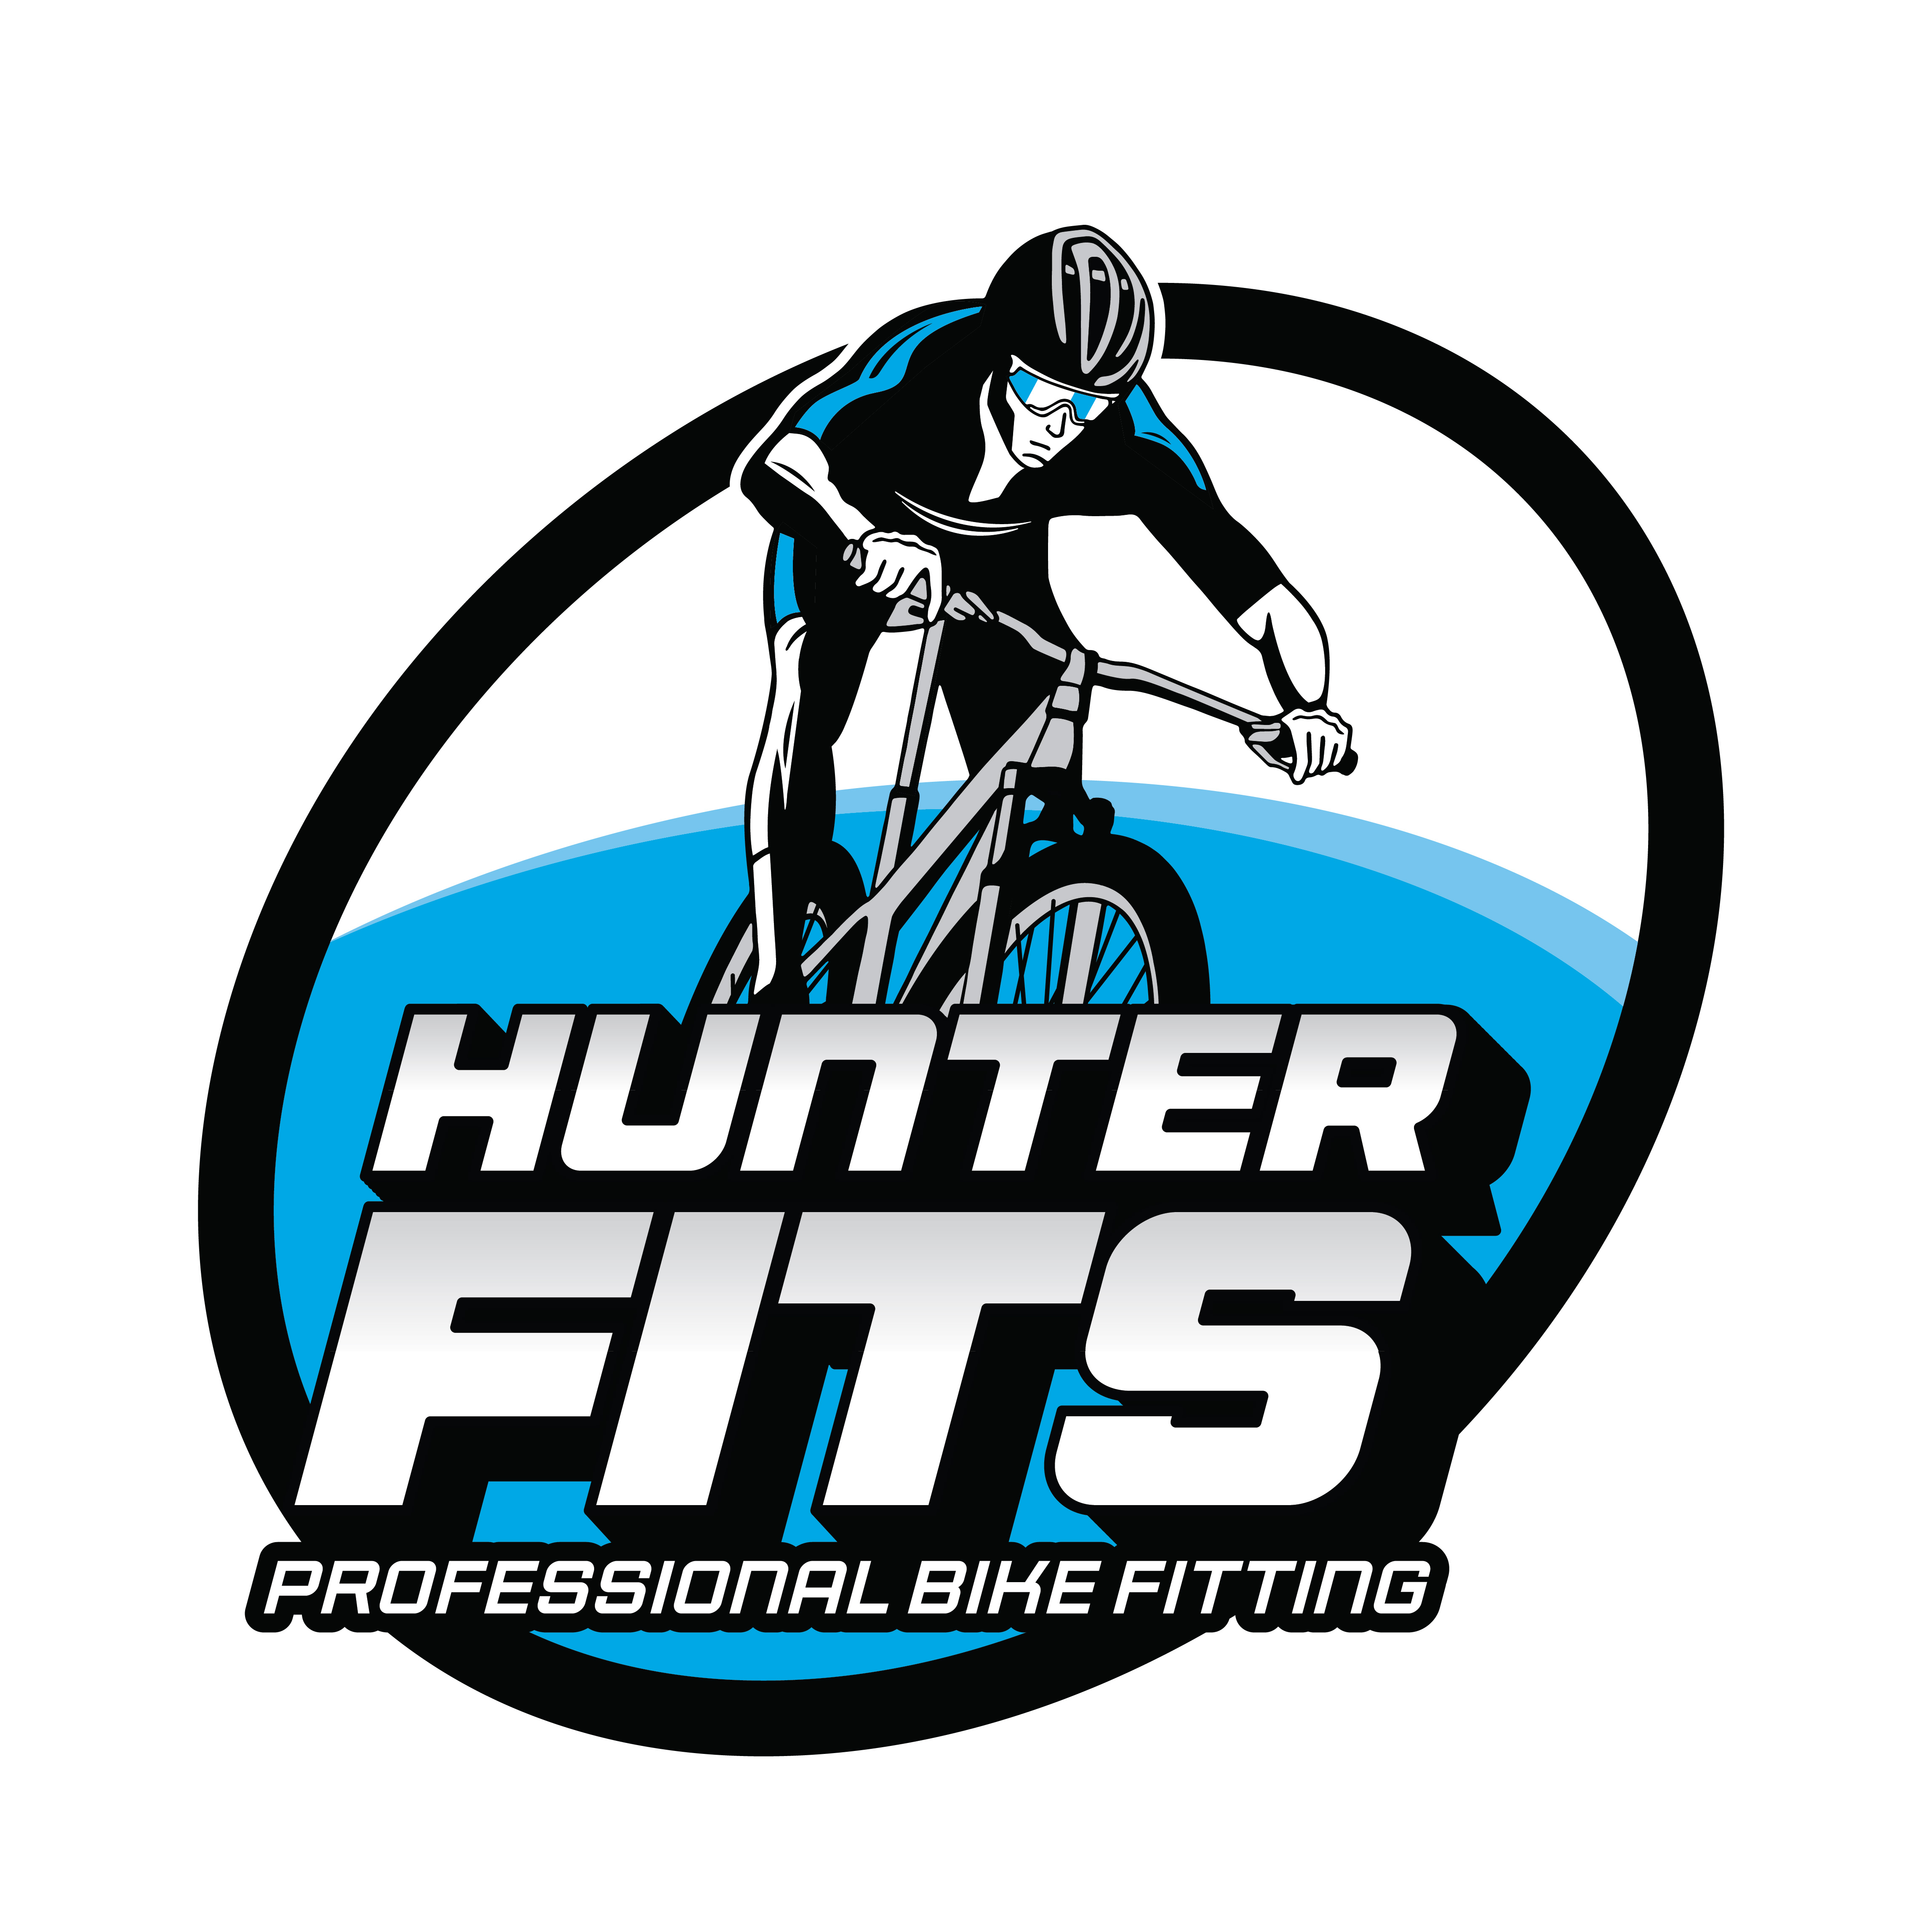 Sponsor HUNTER FITS Professional Bike Fitting